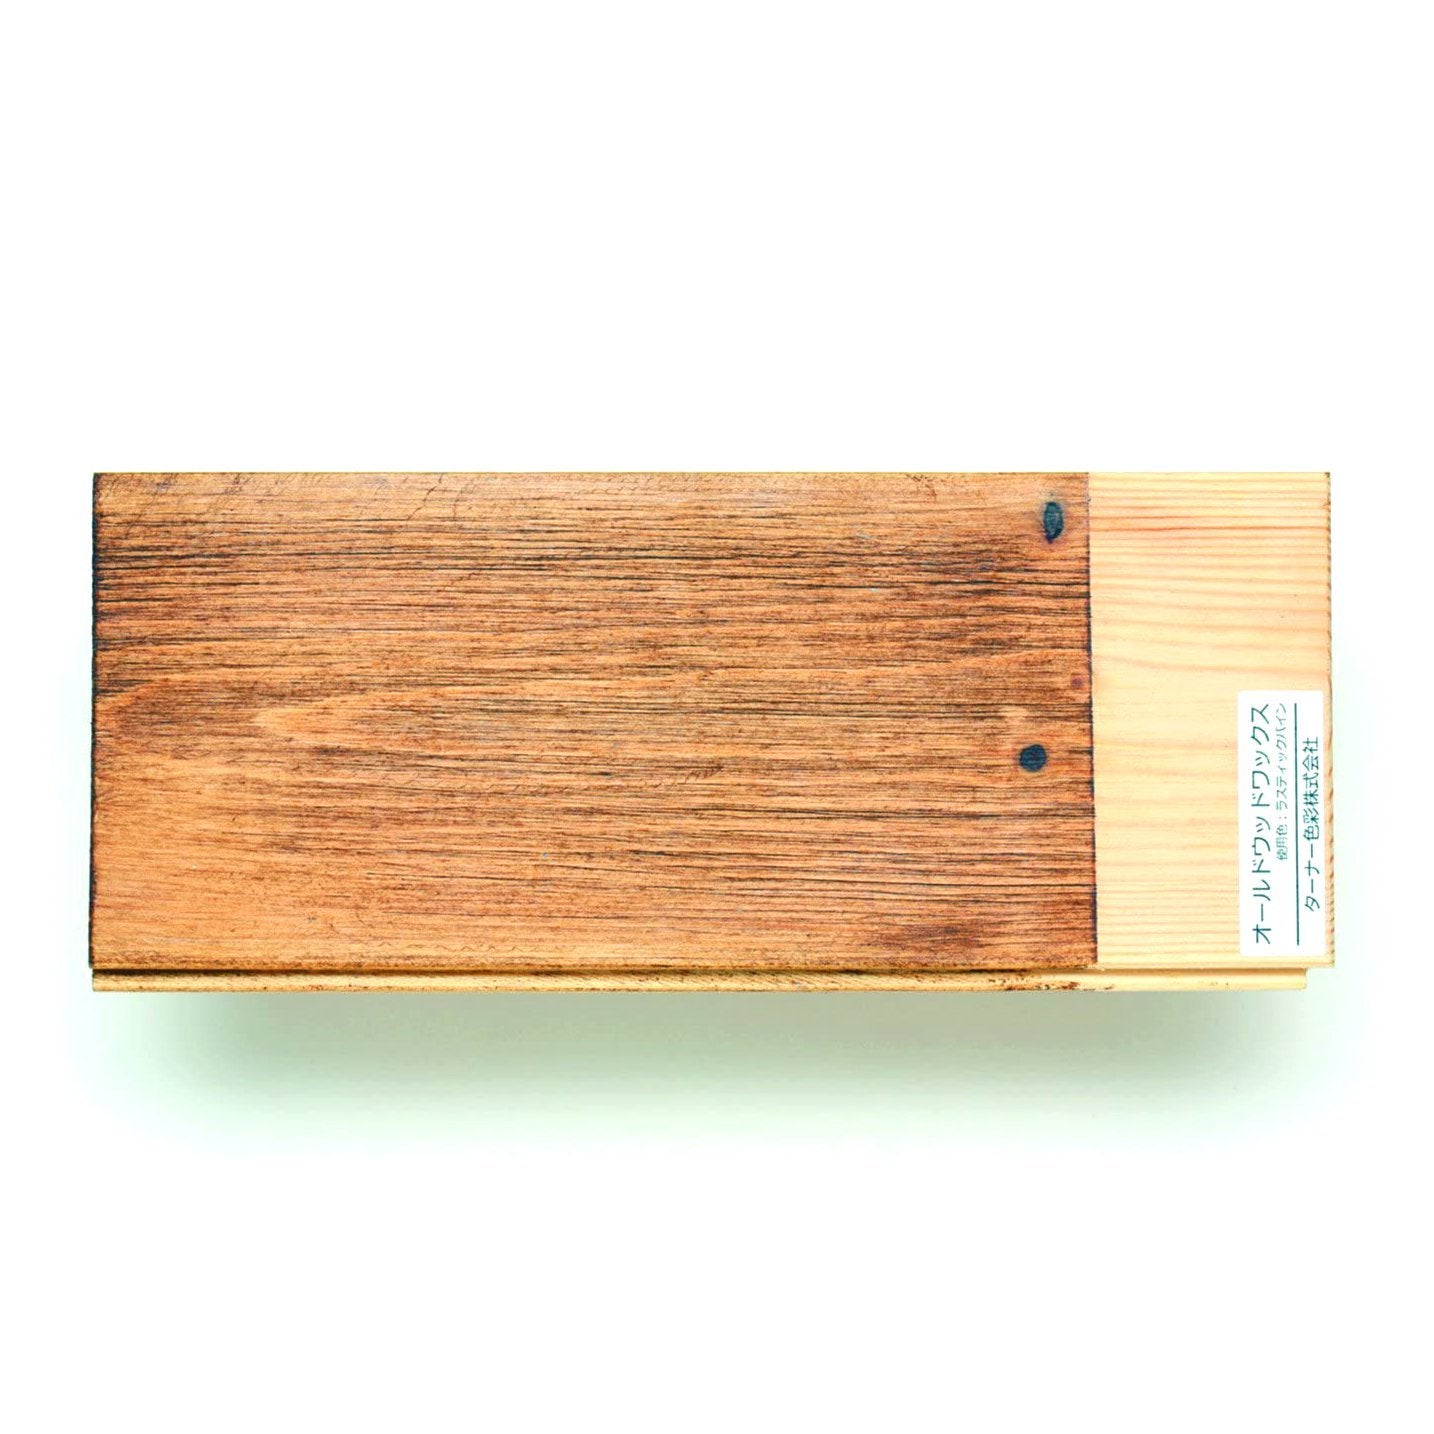 Turner Old Wood Wax Rustic Pine - LAB Collector Hong Kong